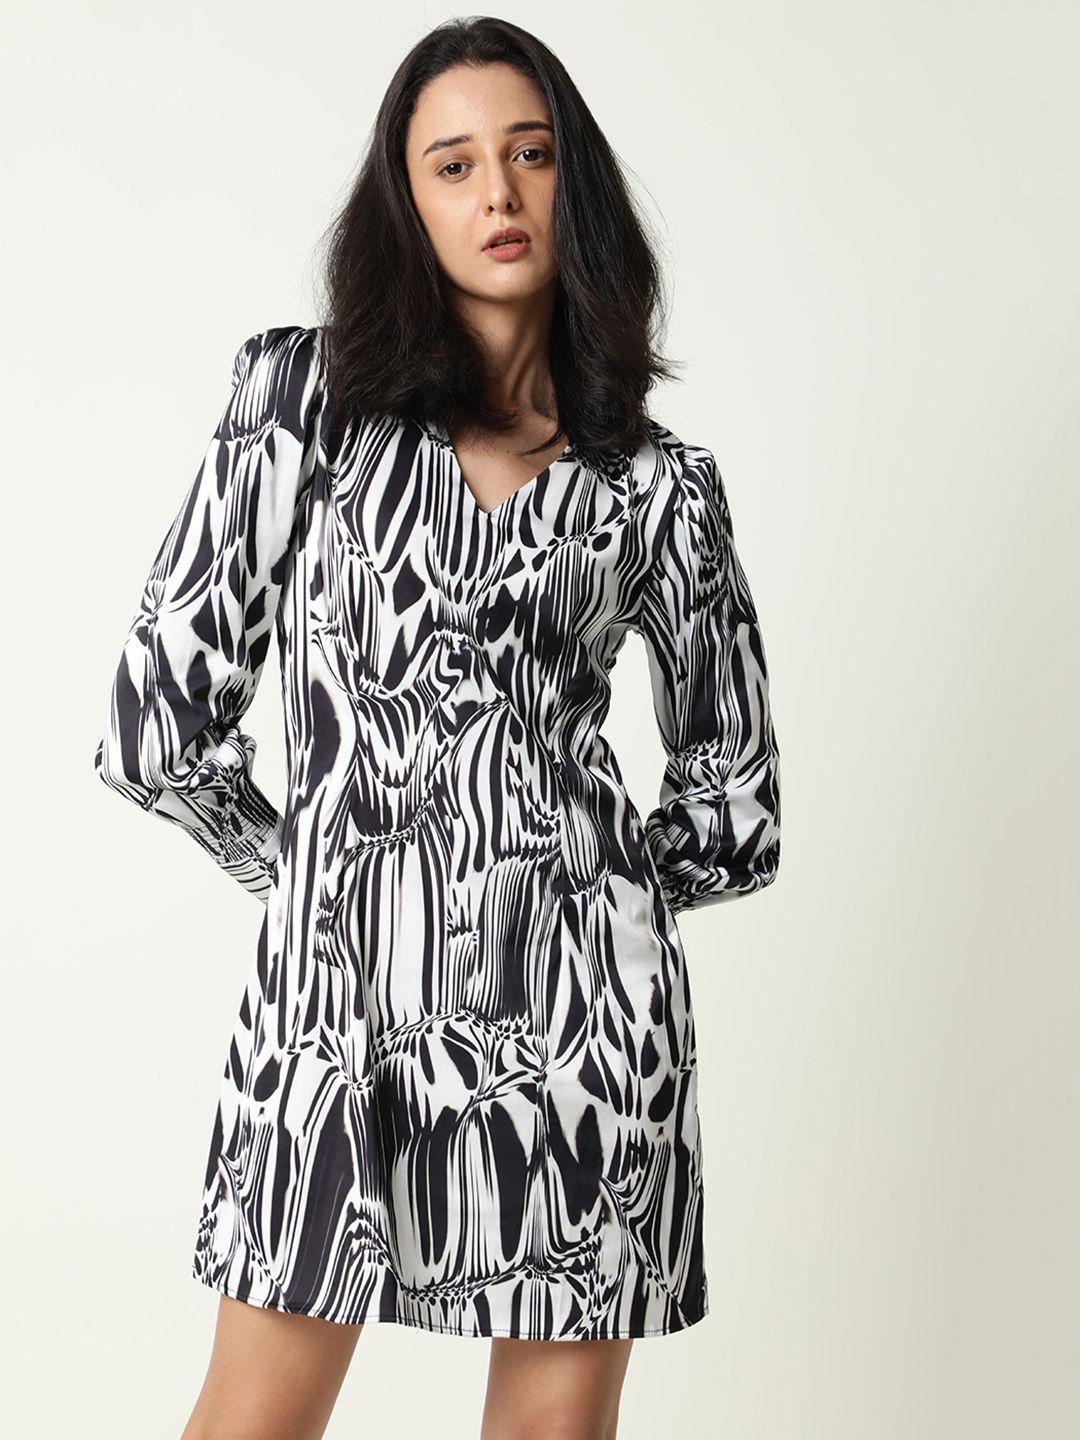 rareism black & white abstract printed a-line dress